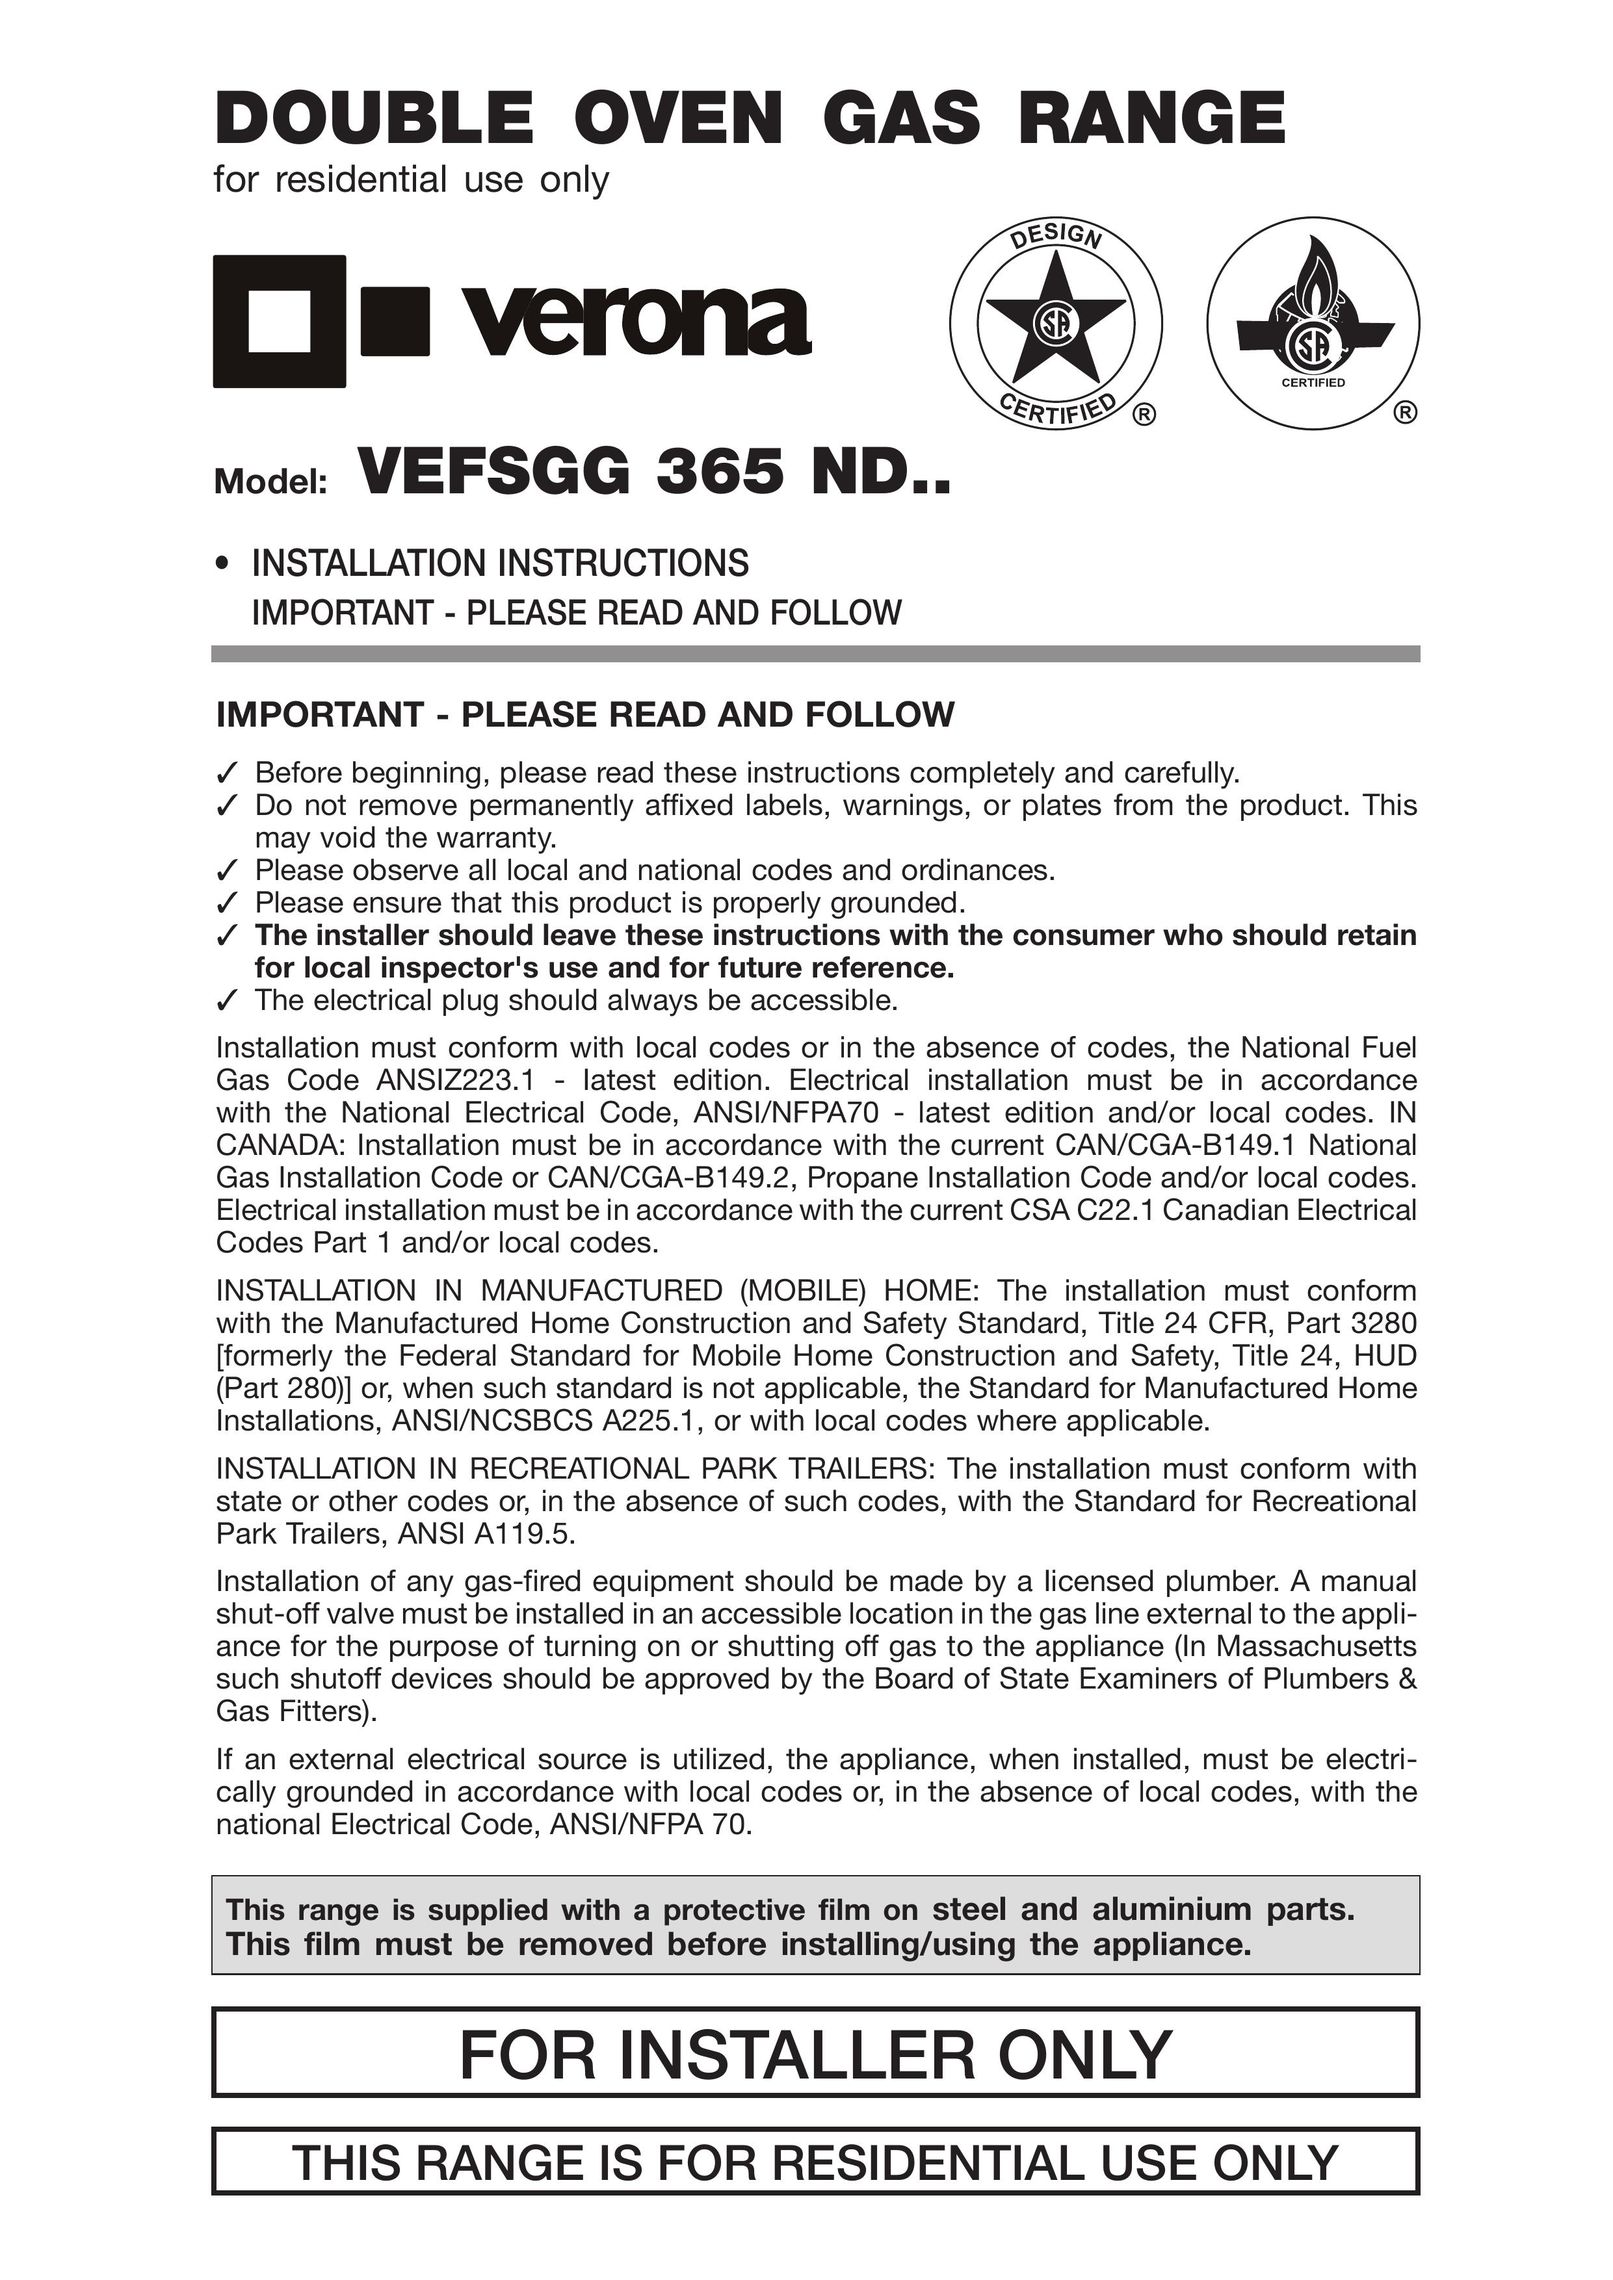 Verona VEFSGG 365 ND Double Oven User Manual